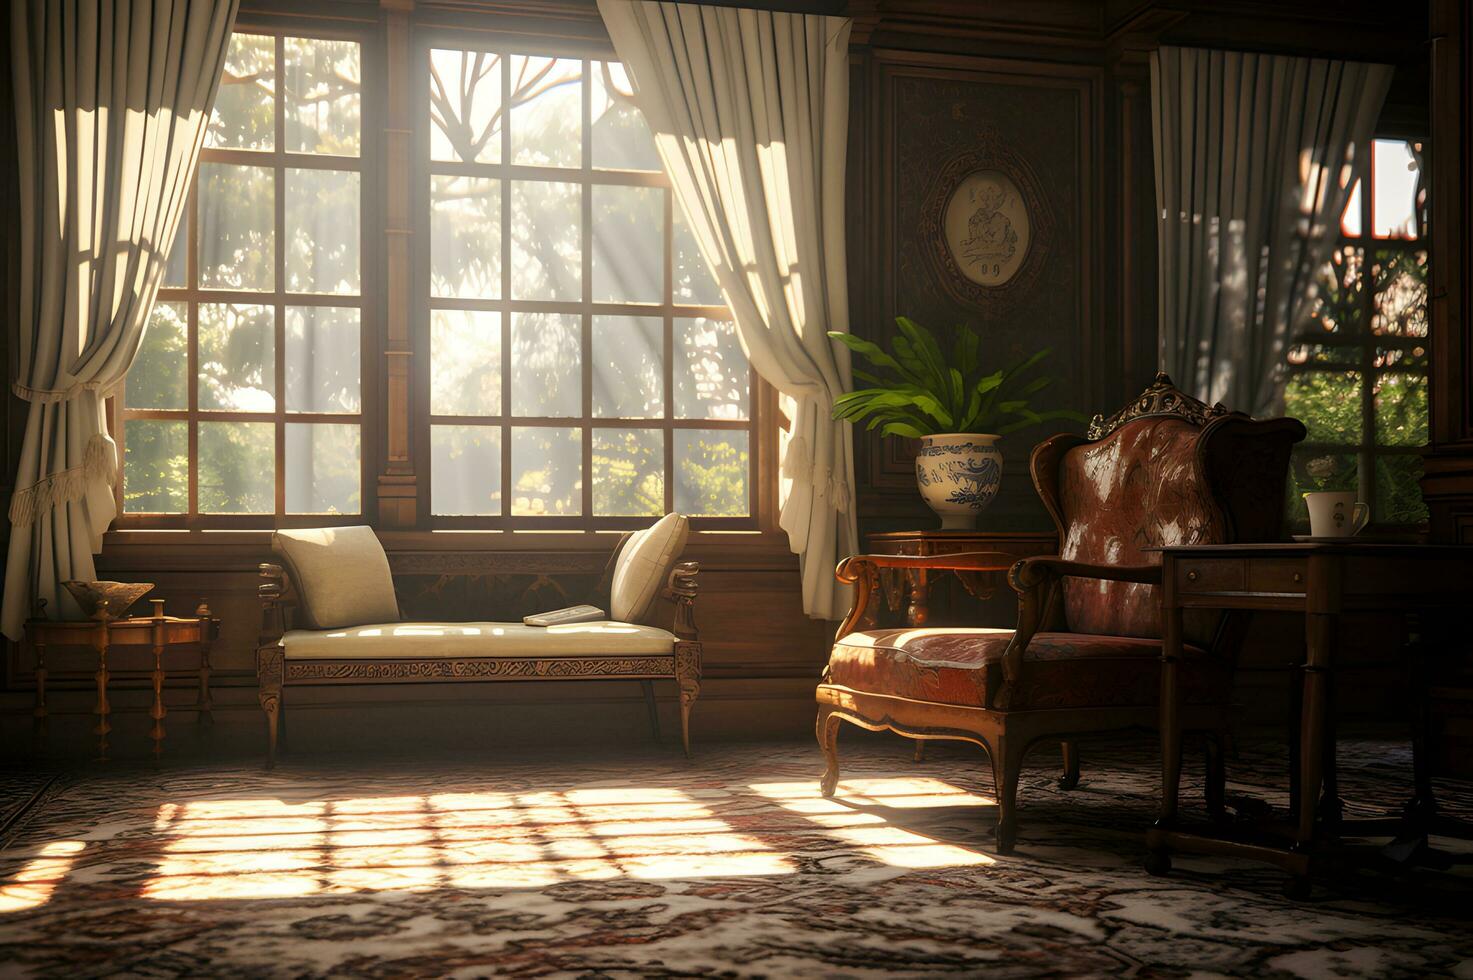 Luxury imperial interiors room with window photo